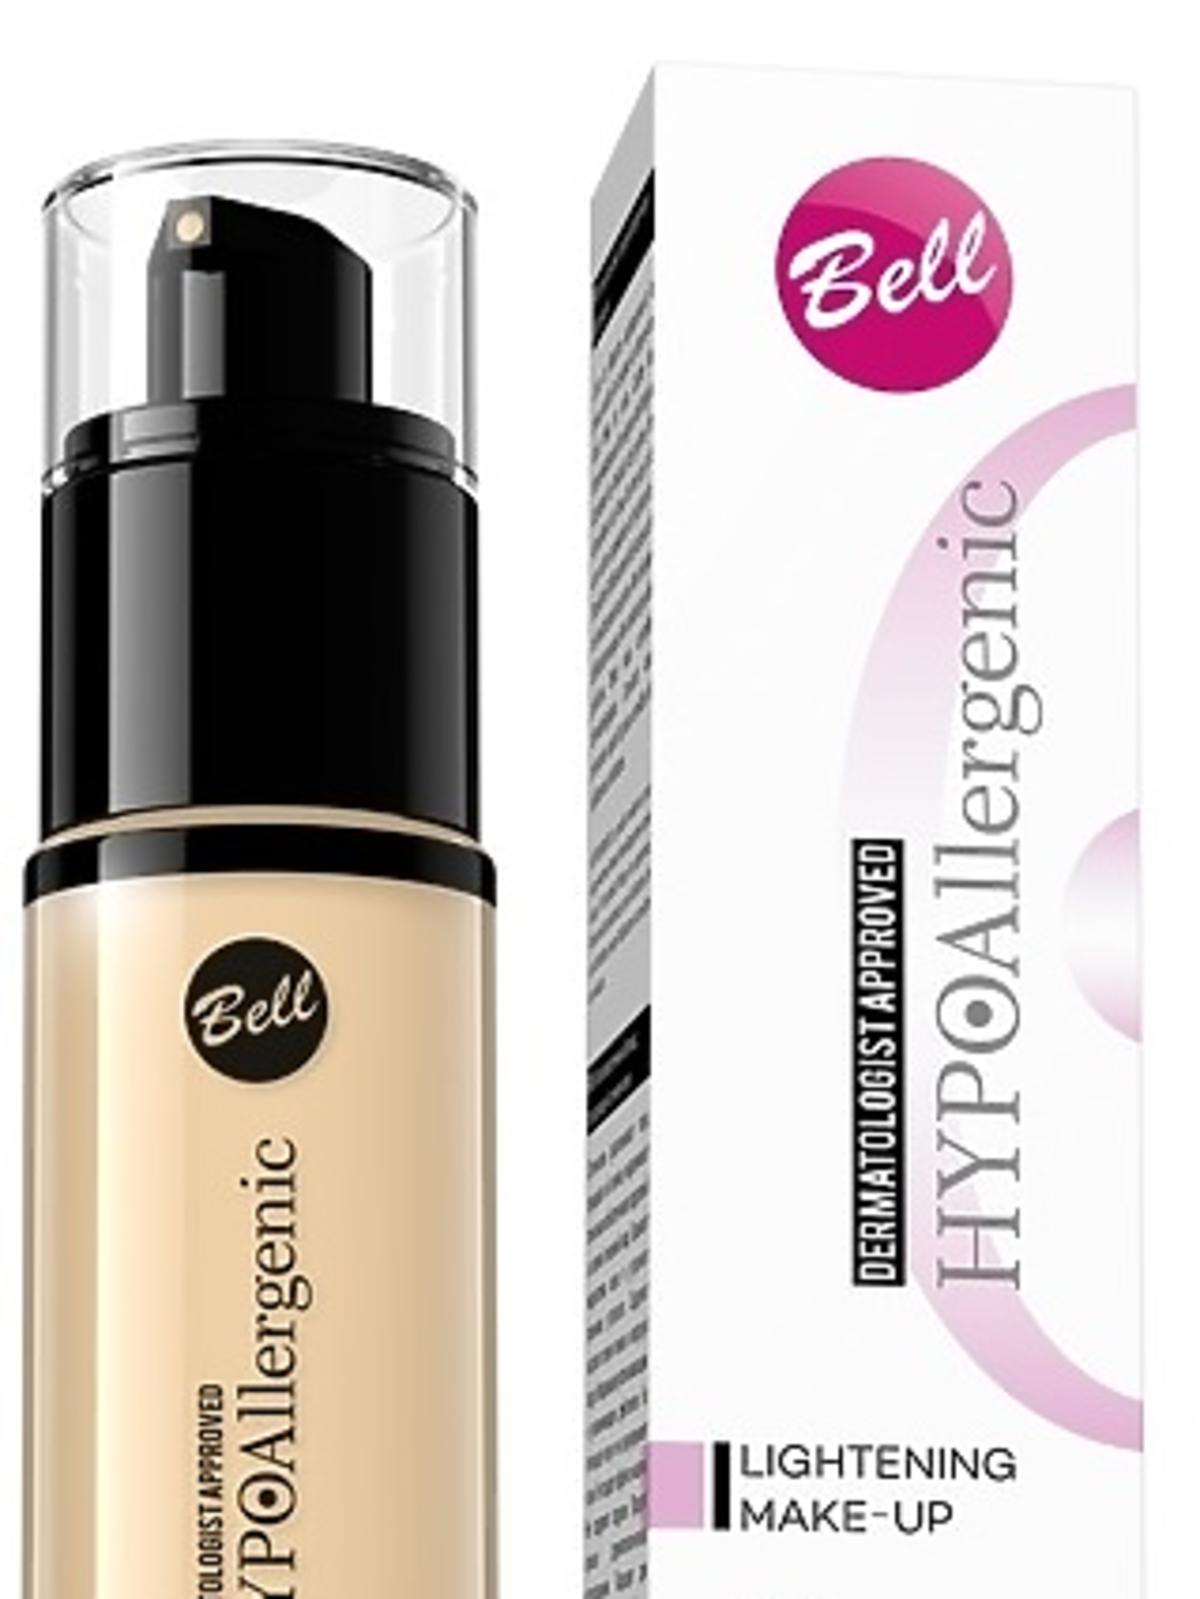 Bell, HYPOAllergenic, Lightening Make - Up